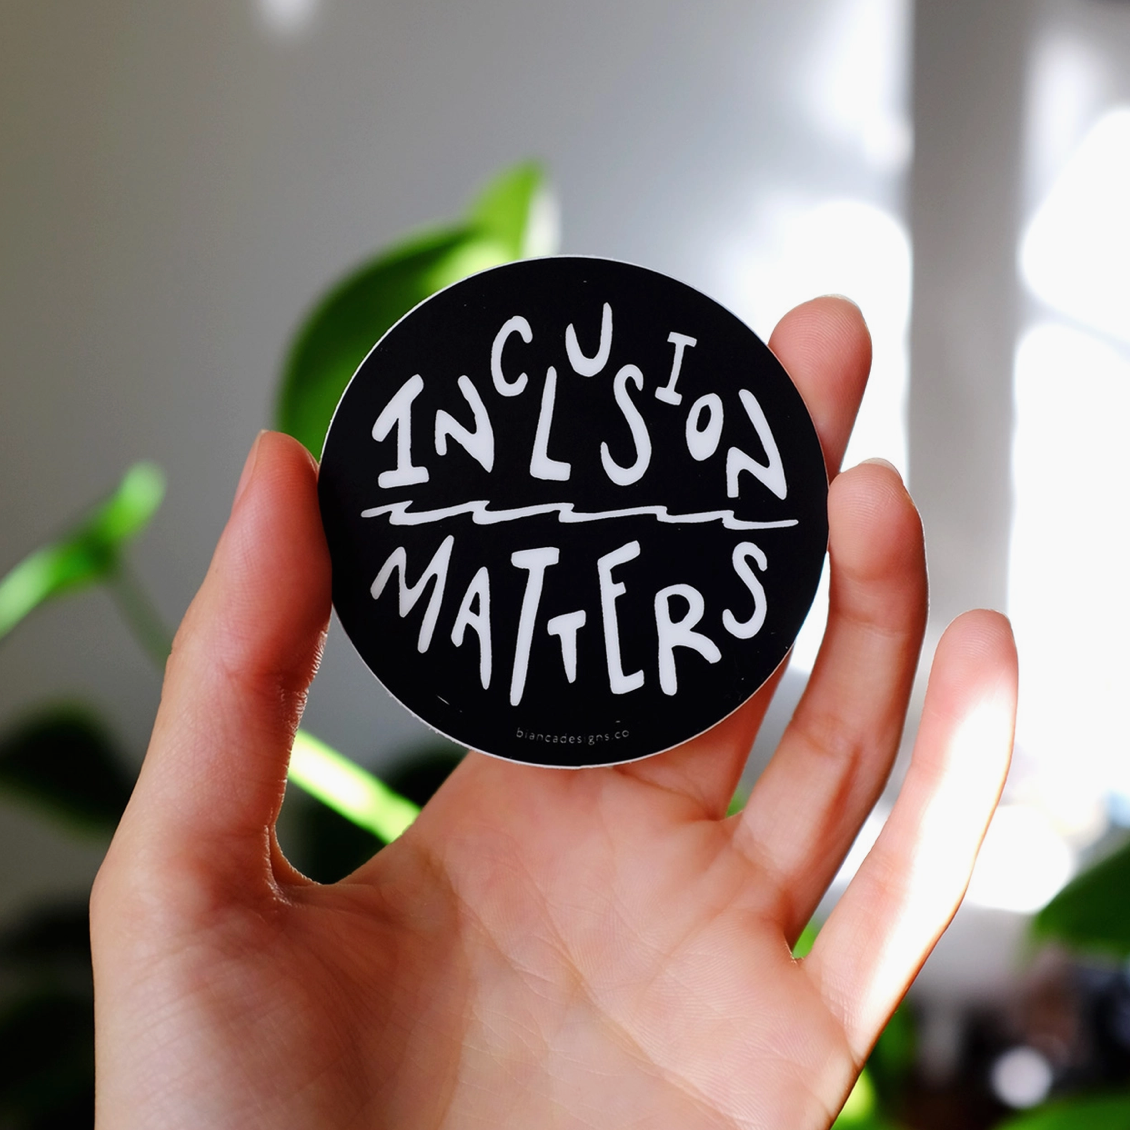 Inclusion Matters Sticker